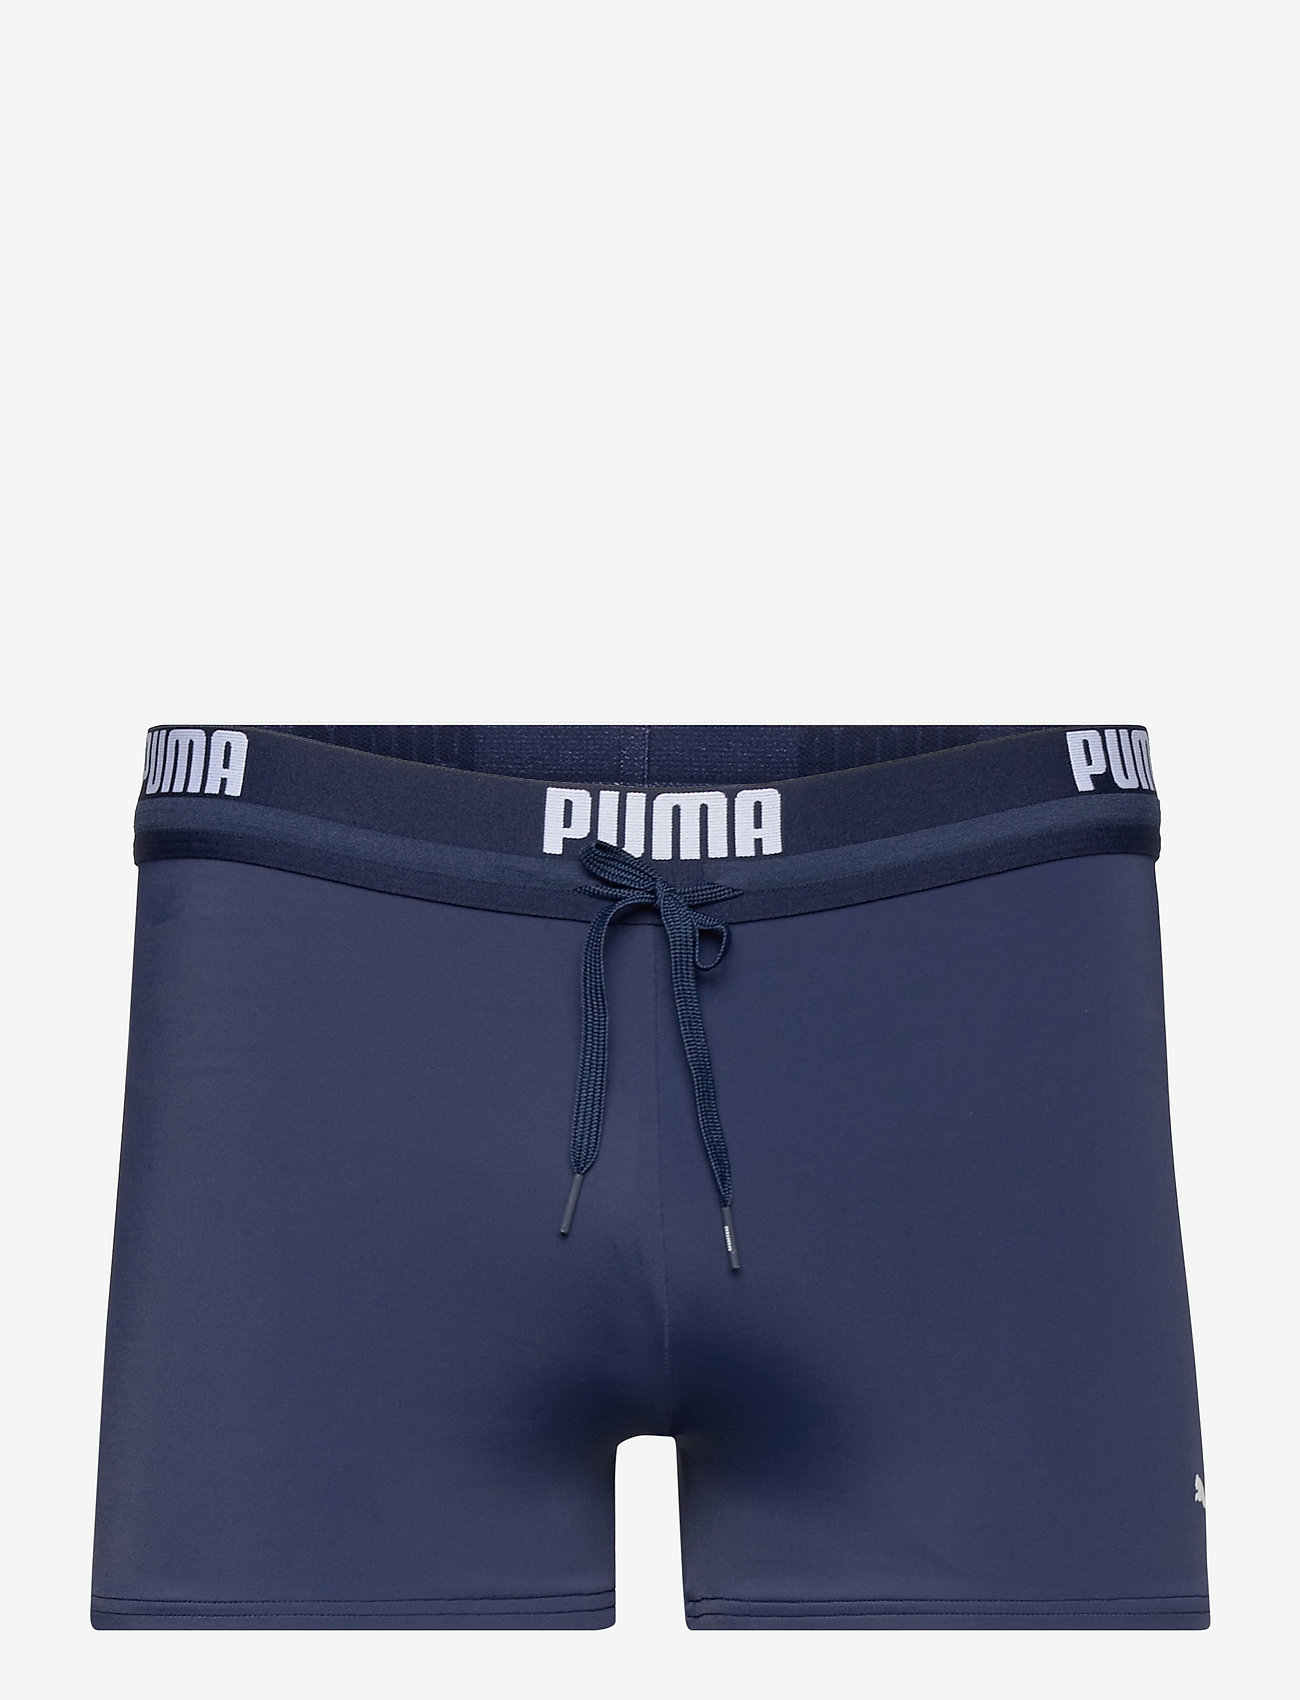 Puma Swim Puma Swim Men Logo Swim Trunk 1p (Navy), (26.60 €) | Large ...